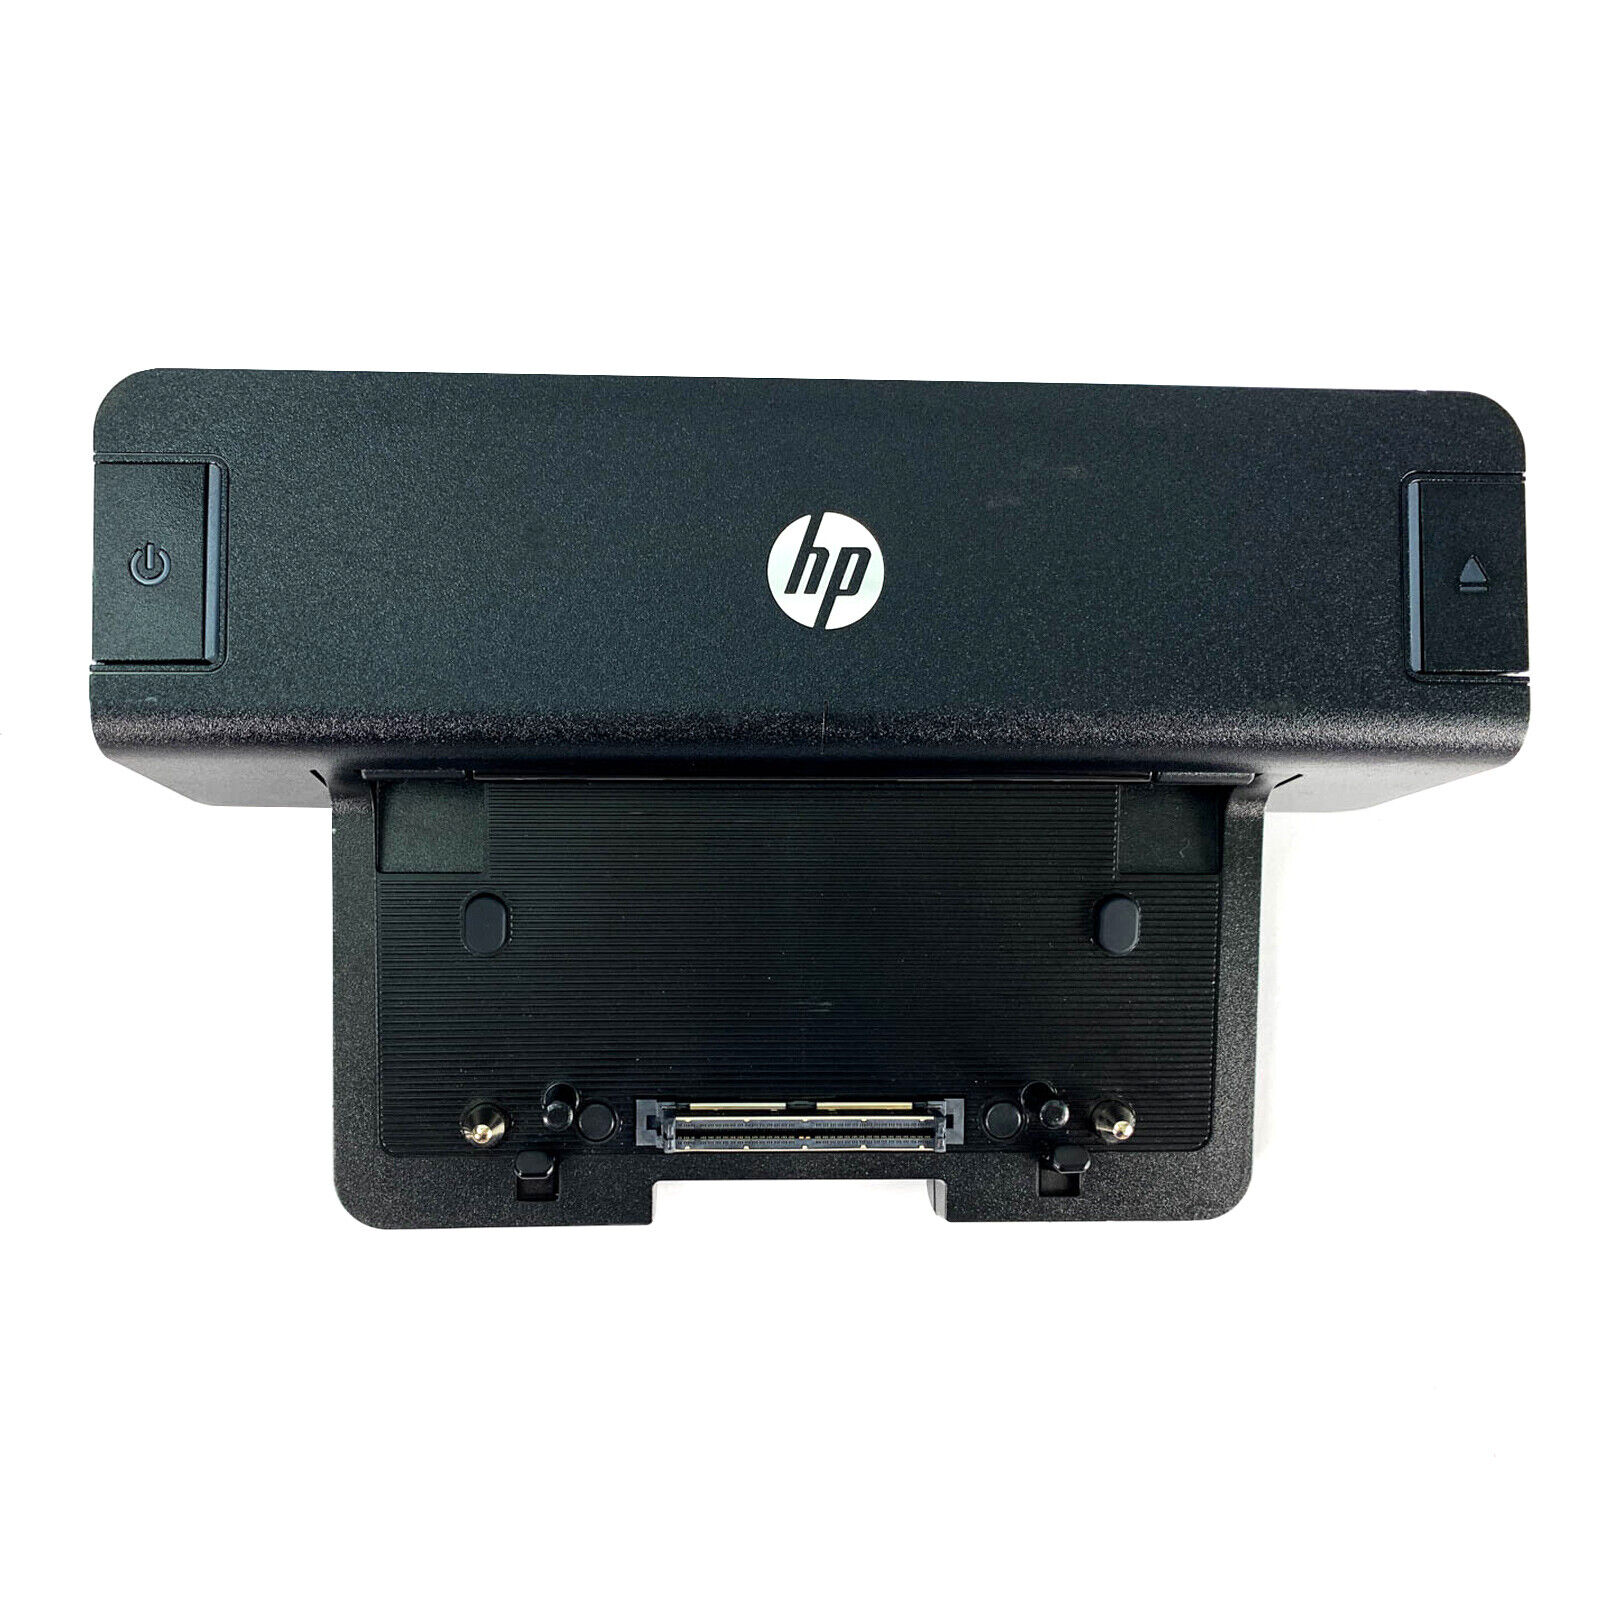 HP HSTNN-I11X Docking Station Port Replicator USB 3.0 for Elitebook Laptop